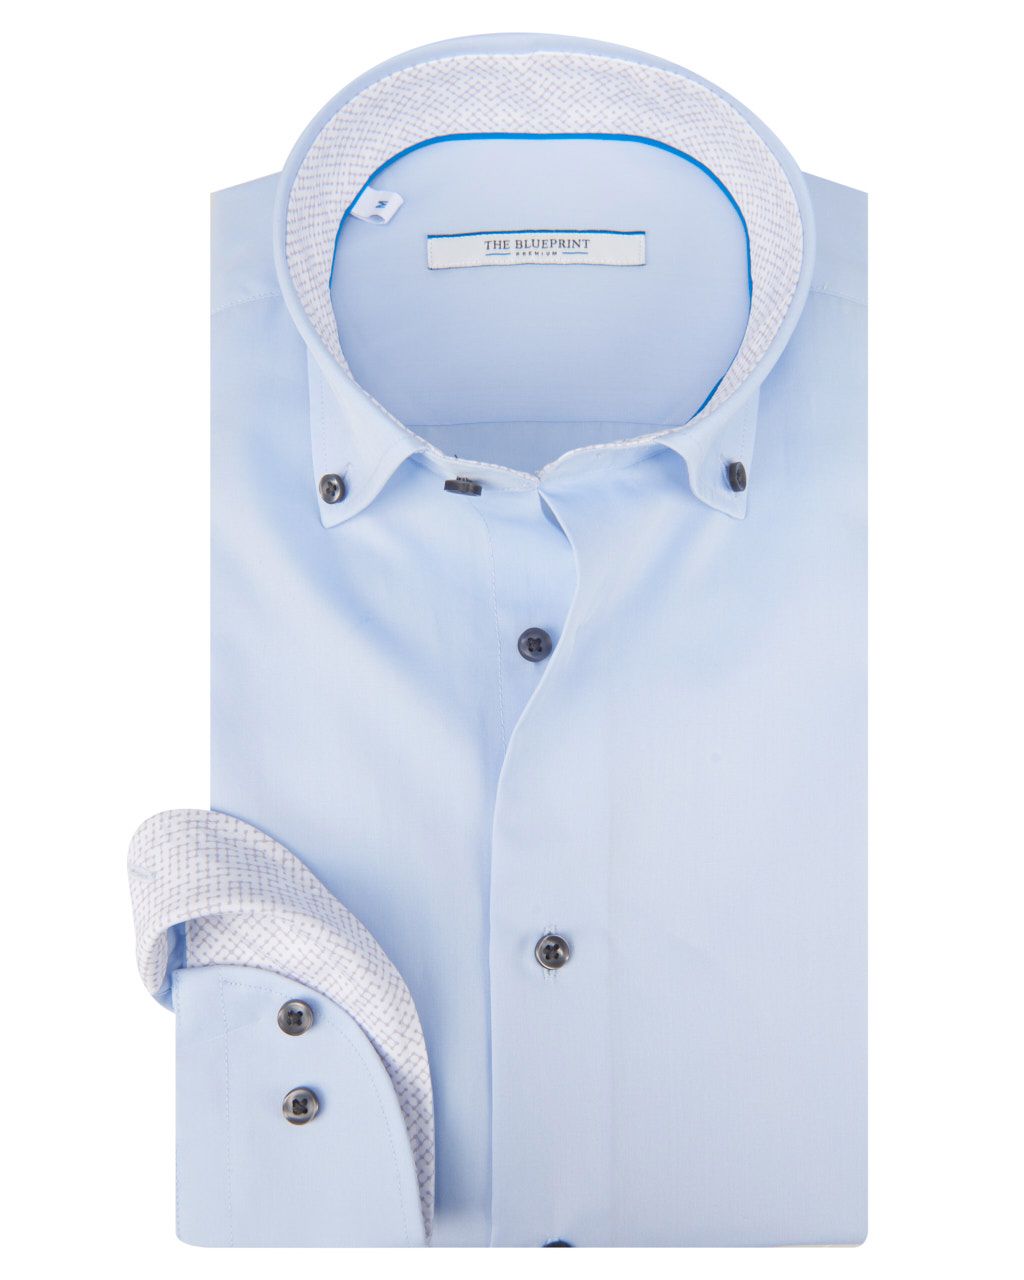 The BLUEPRINT Premium Trendy overhemd LM Middenblauw uni 061887-001-L